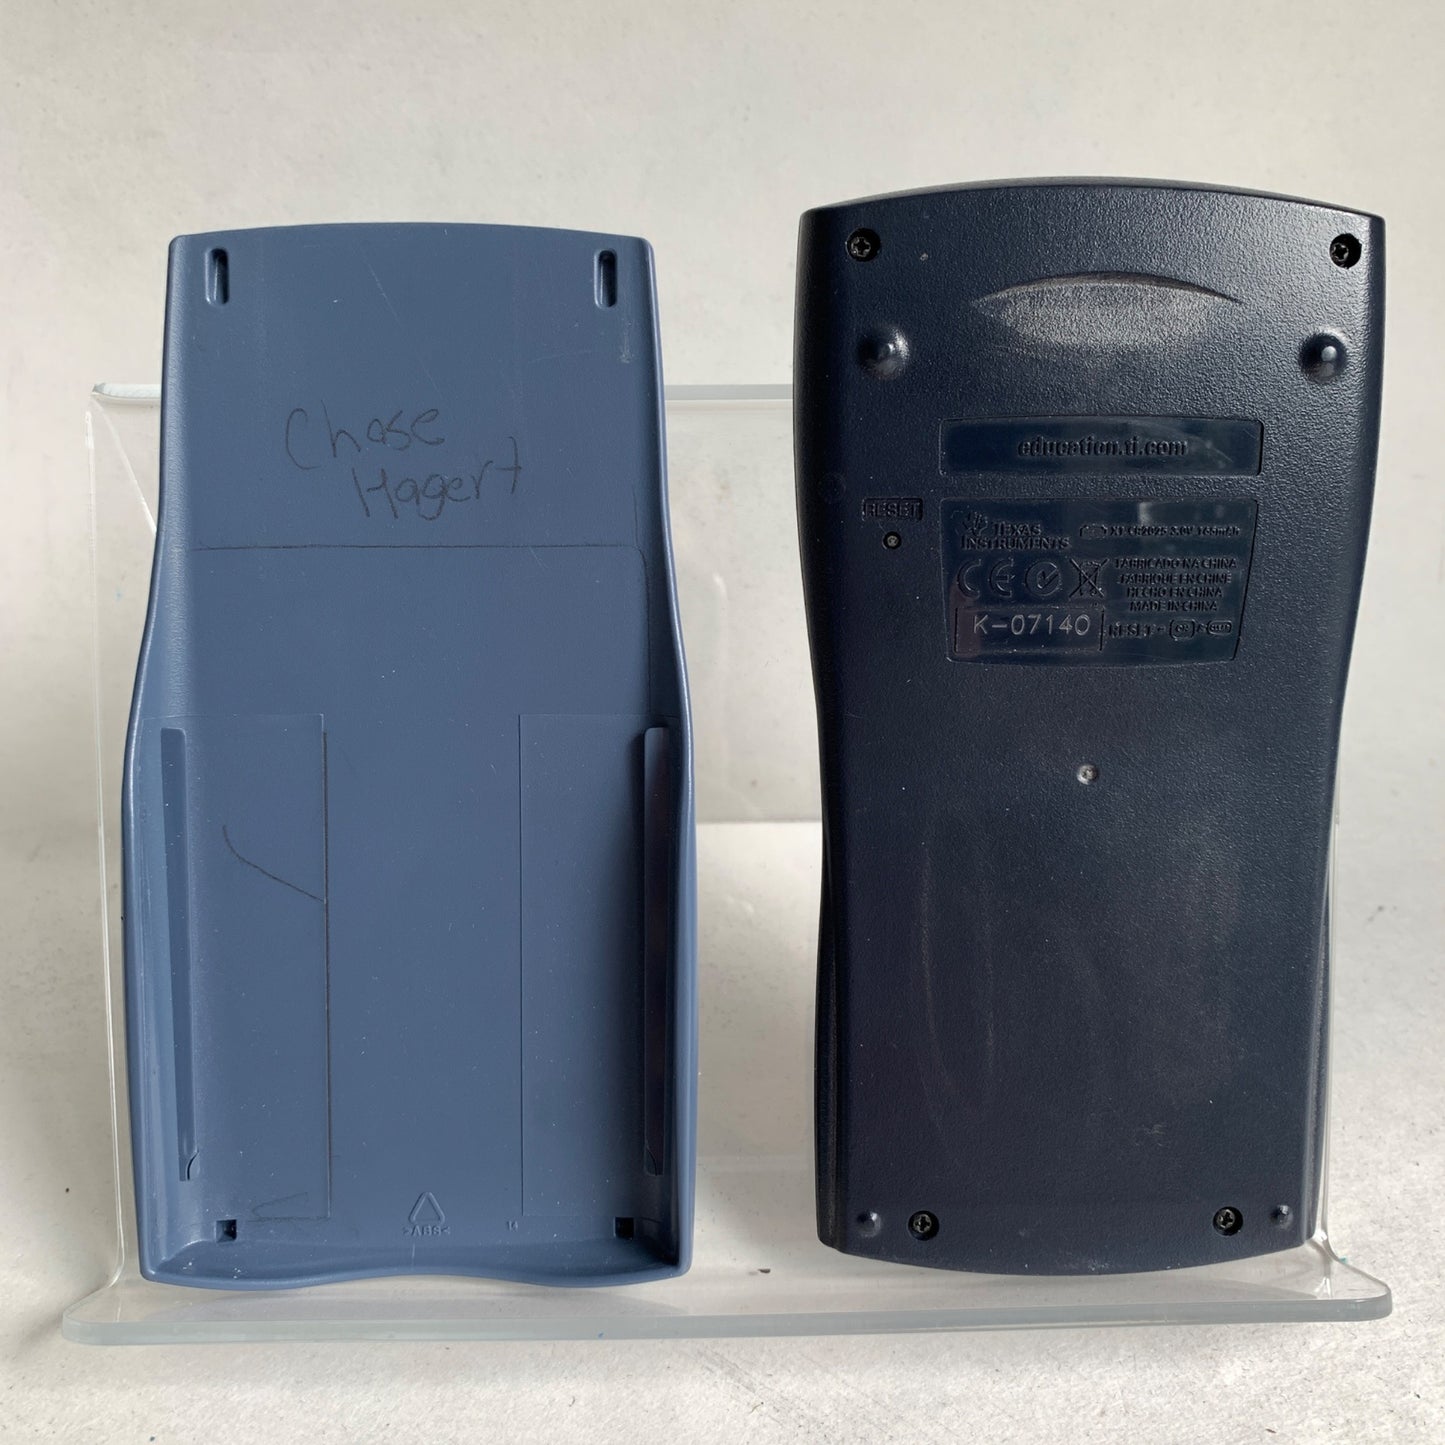 Texas Instruments TI-30X 2S IIS Solar Calculator Blue Working